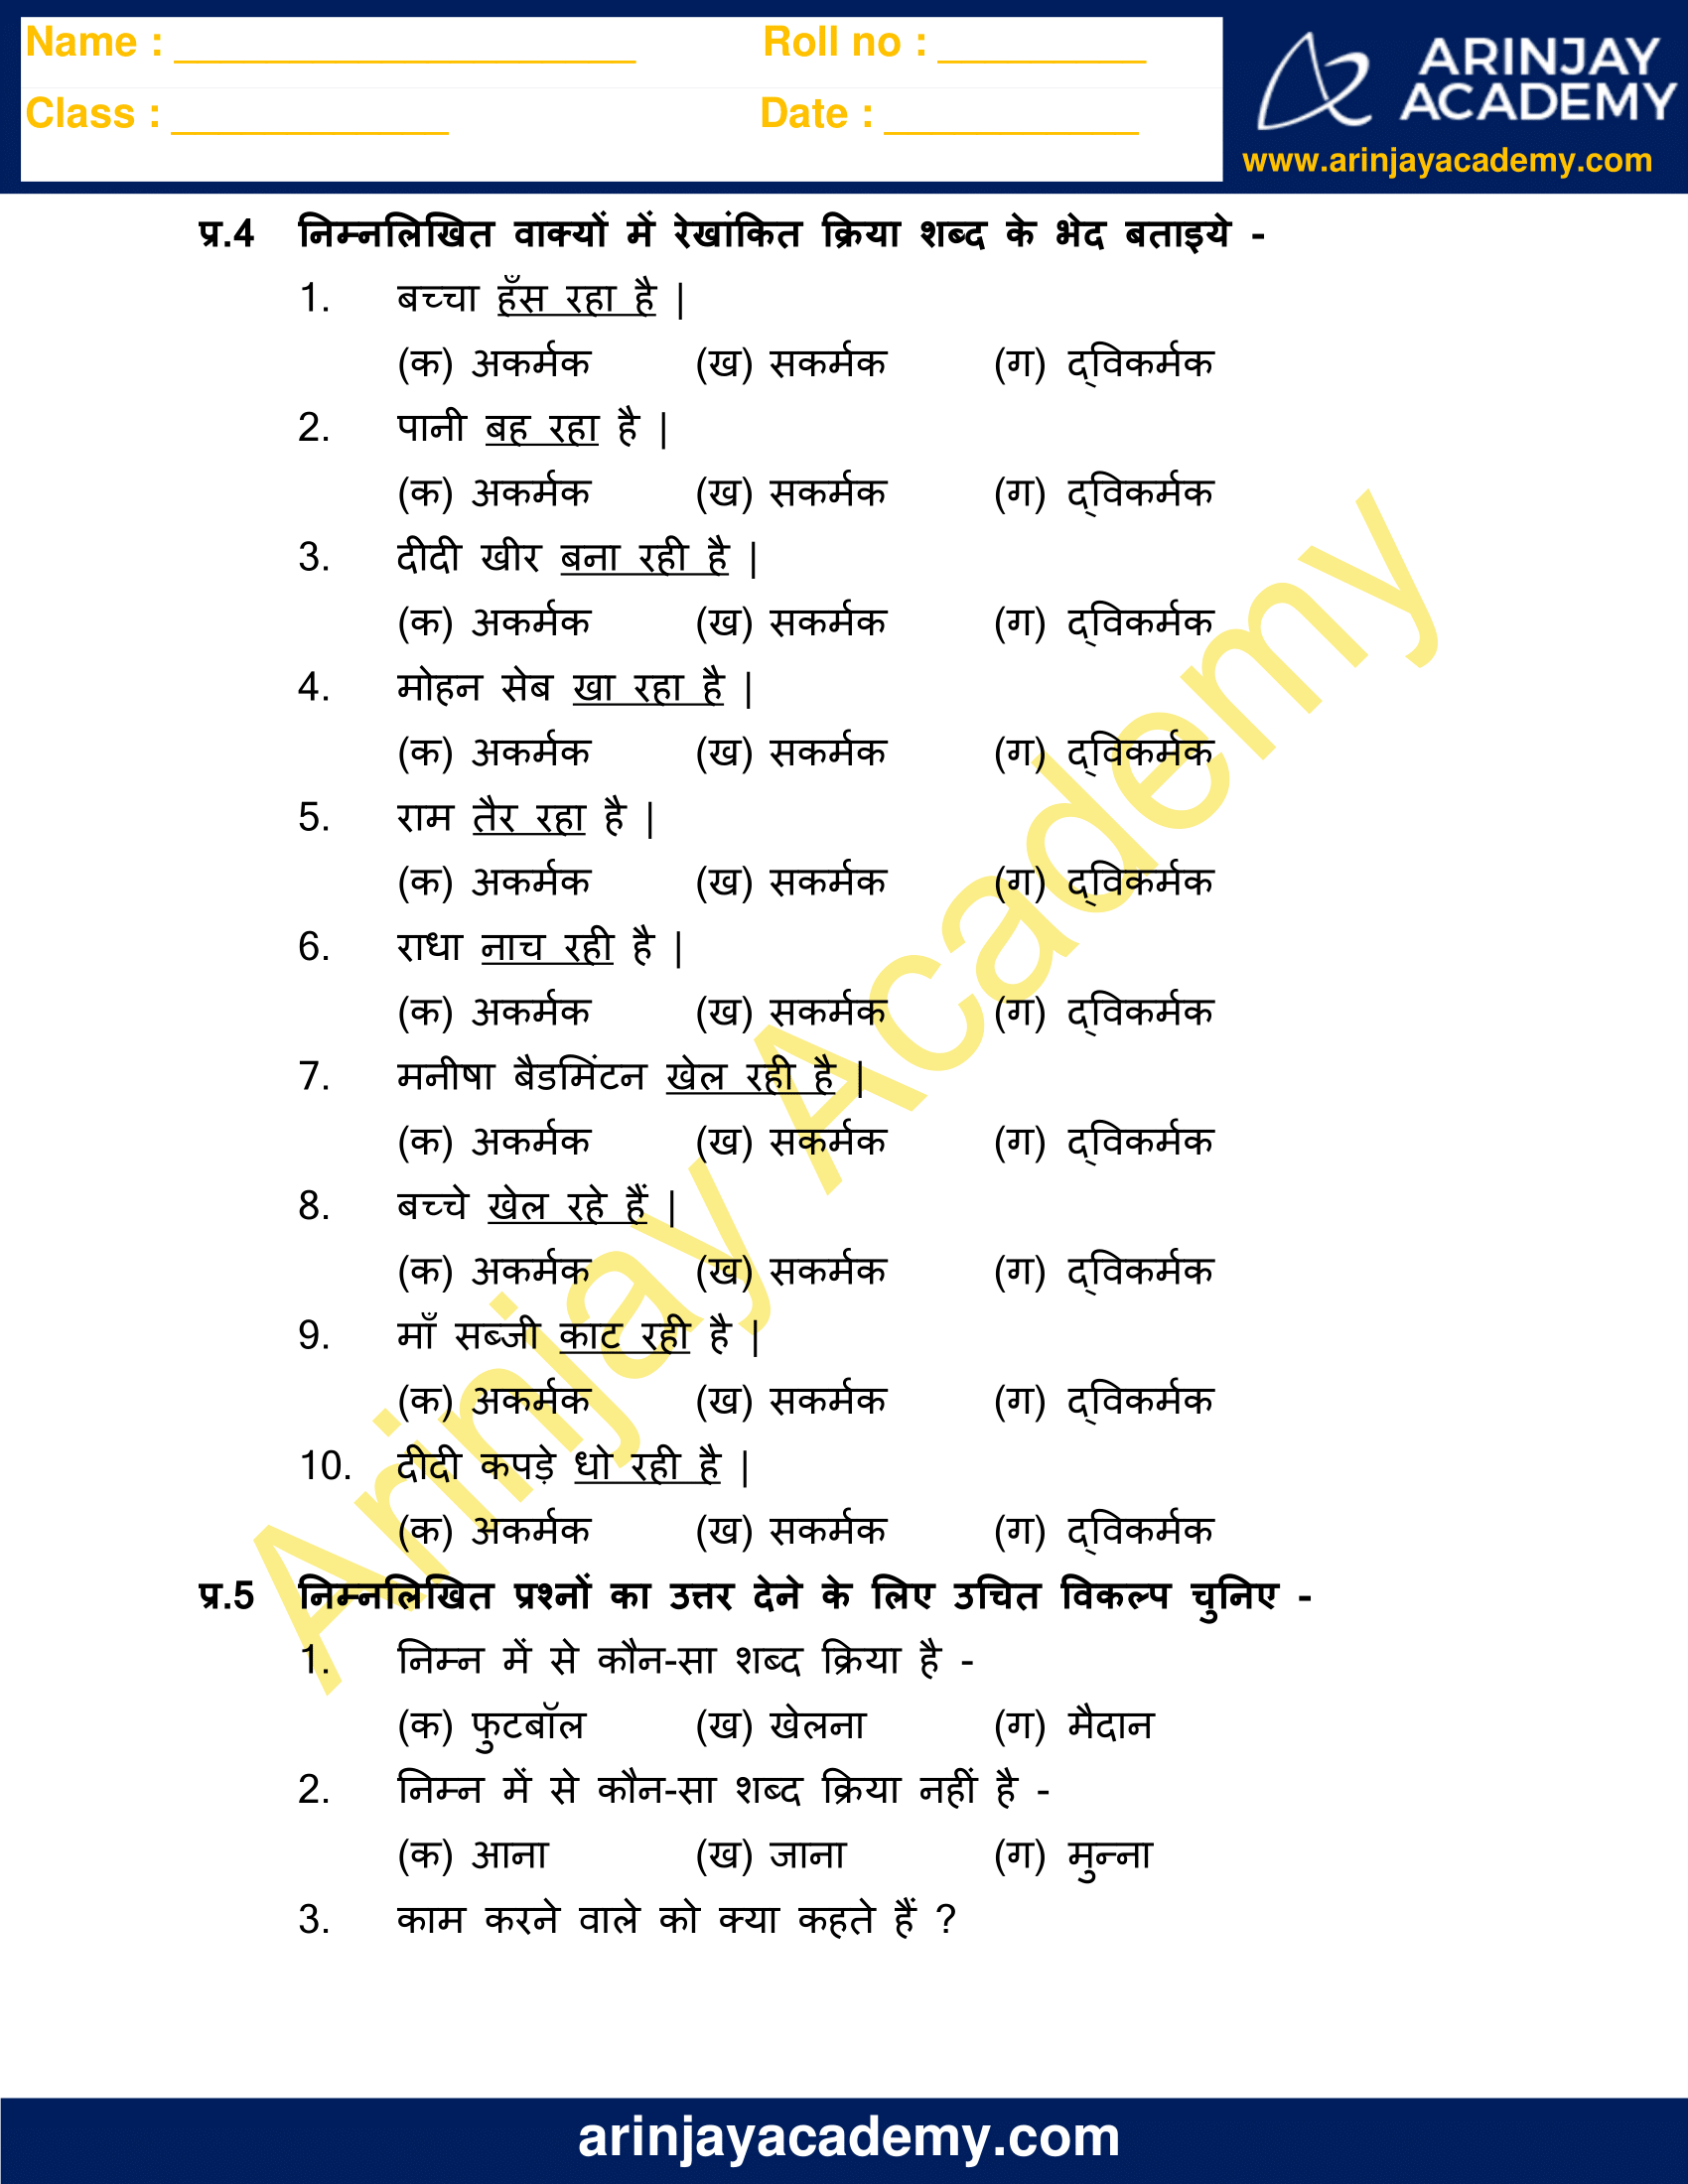 kriya worksheet for class 4 free and printable arinjay academy